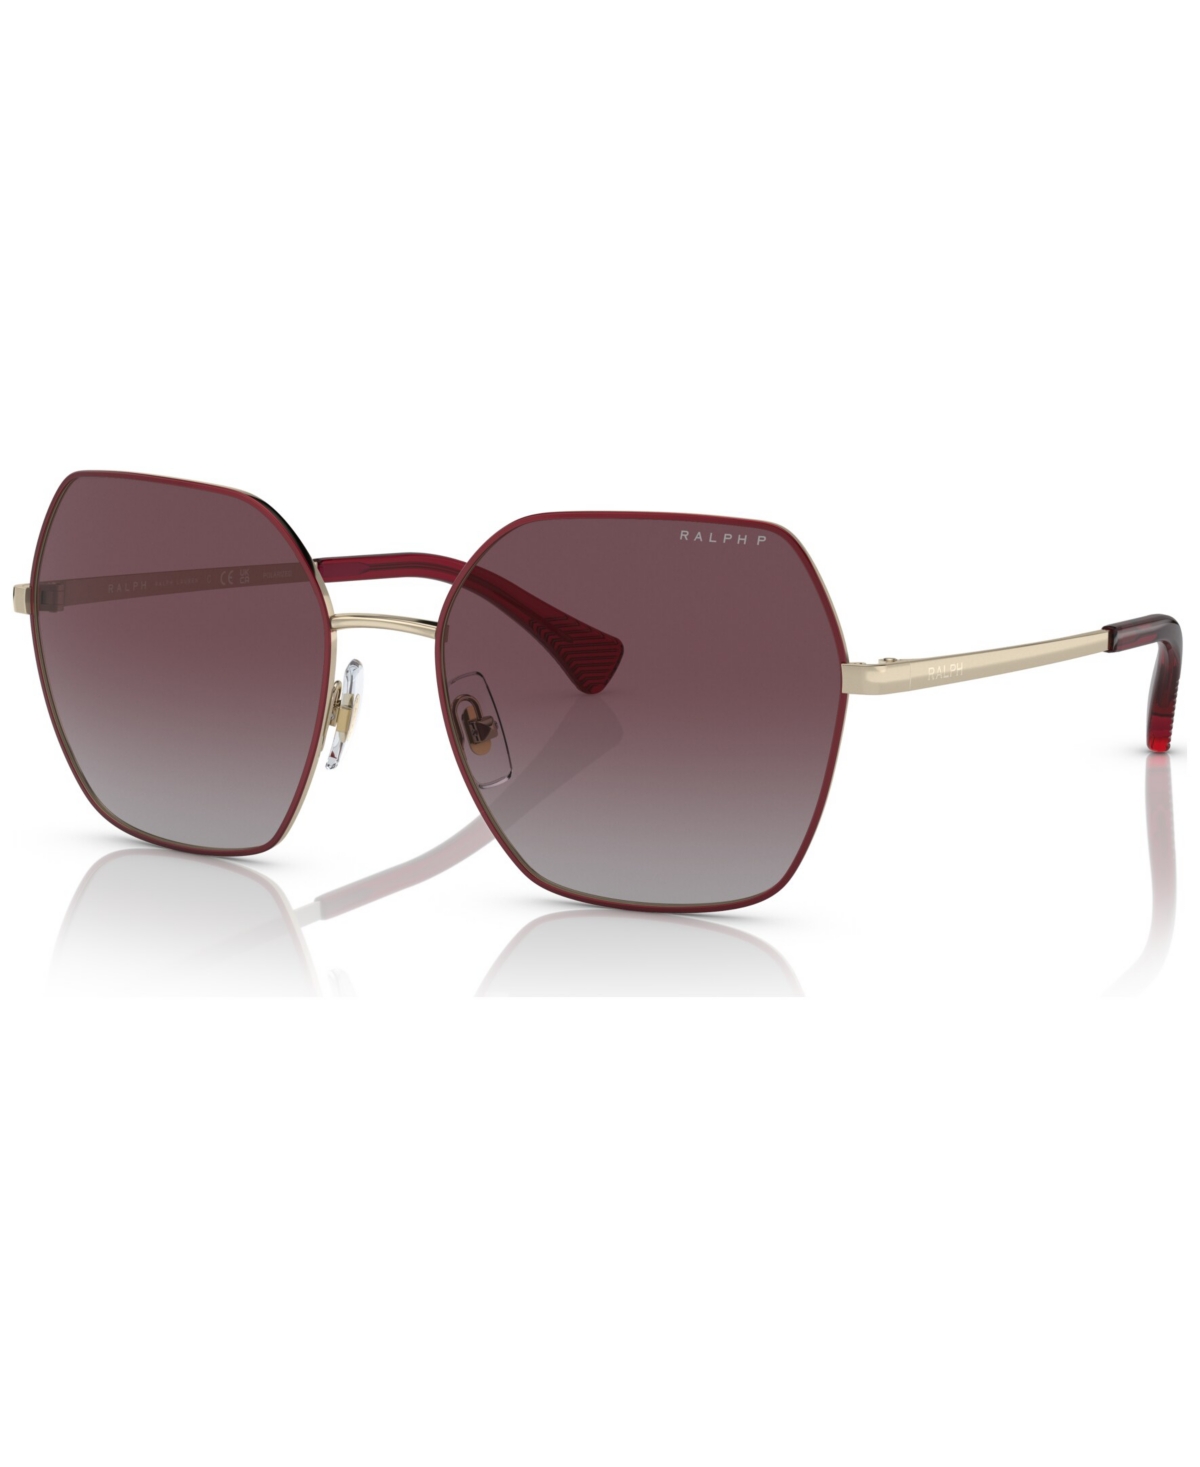 Women's Polarized Sunglasses, RA4138 - Bordeaux